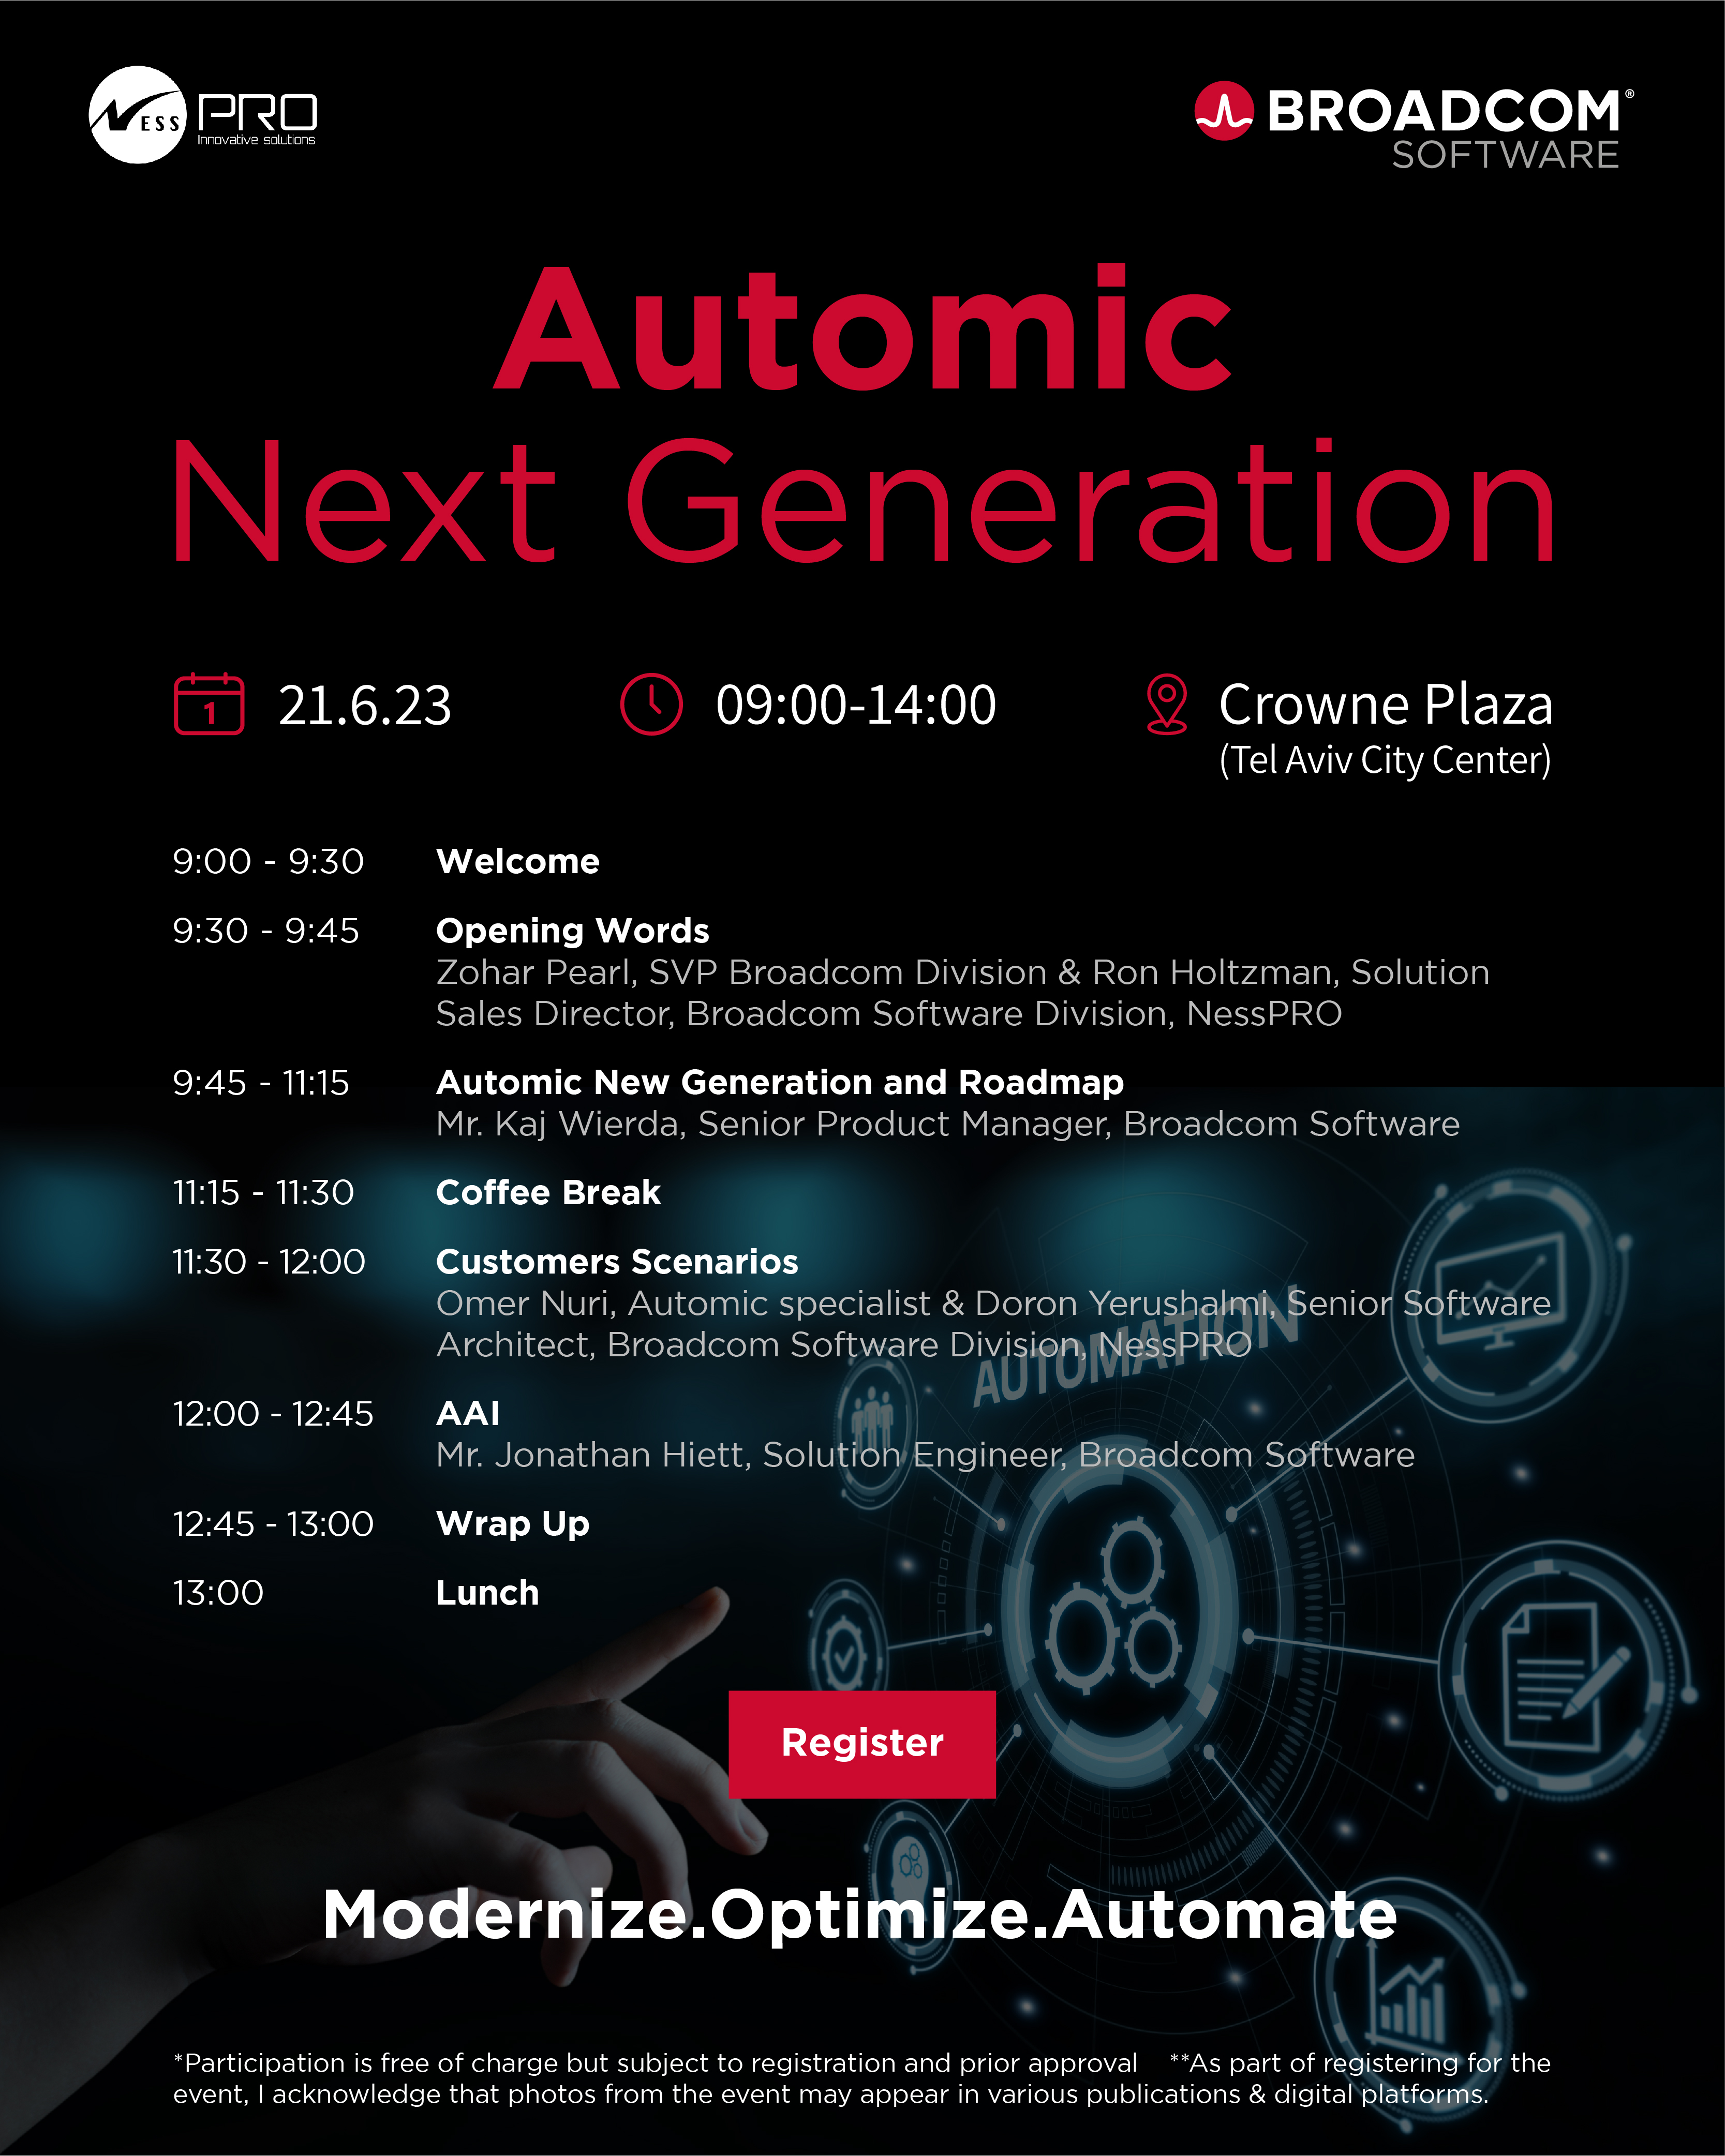 Automic Next Generation